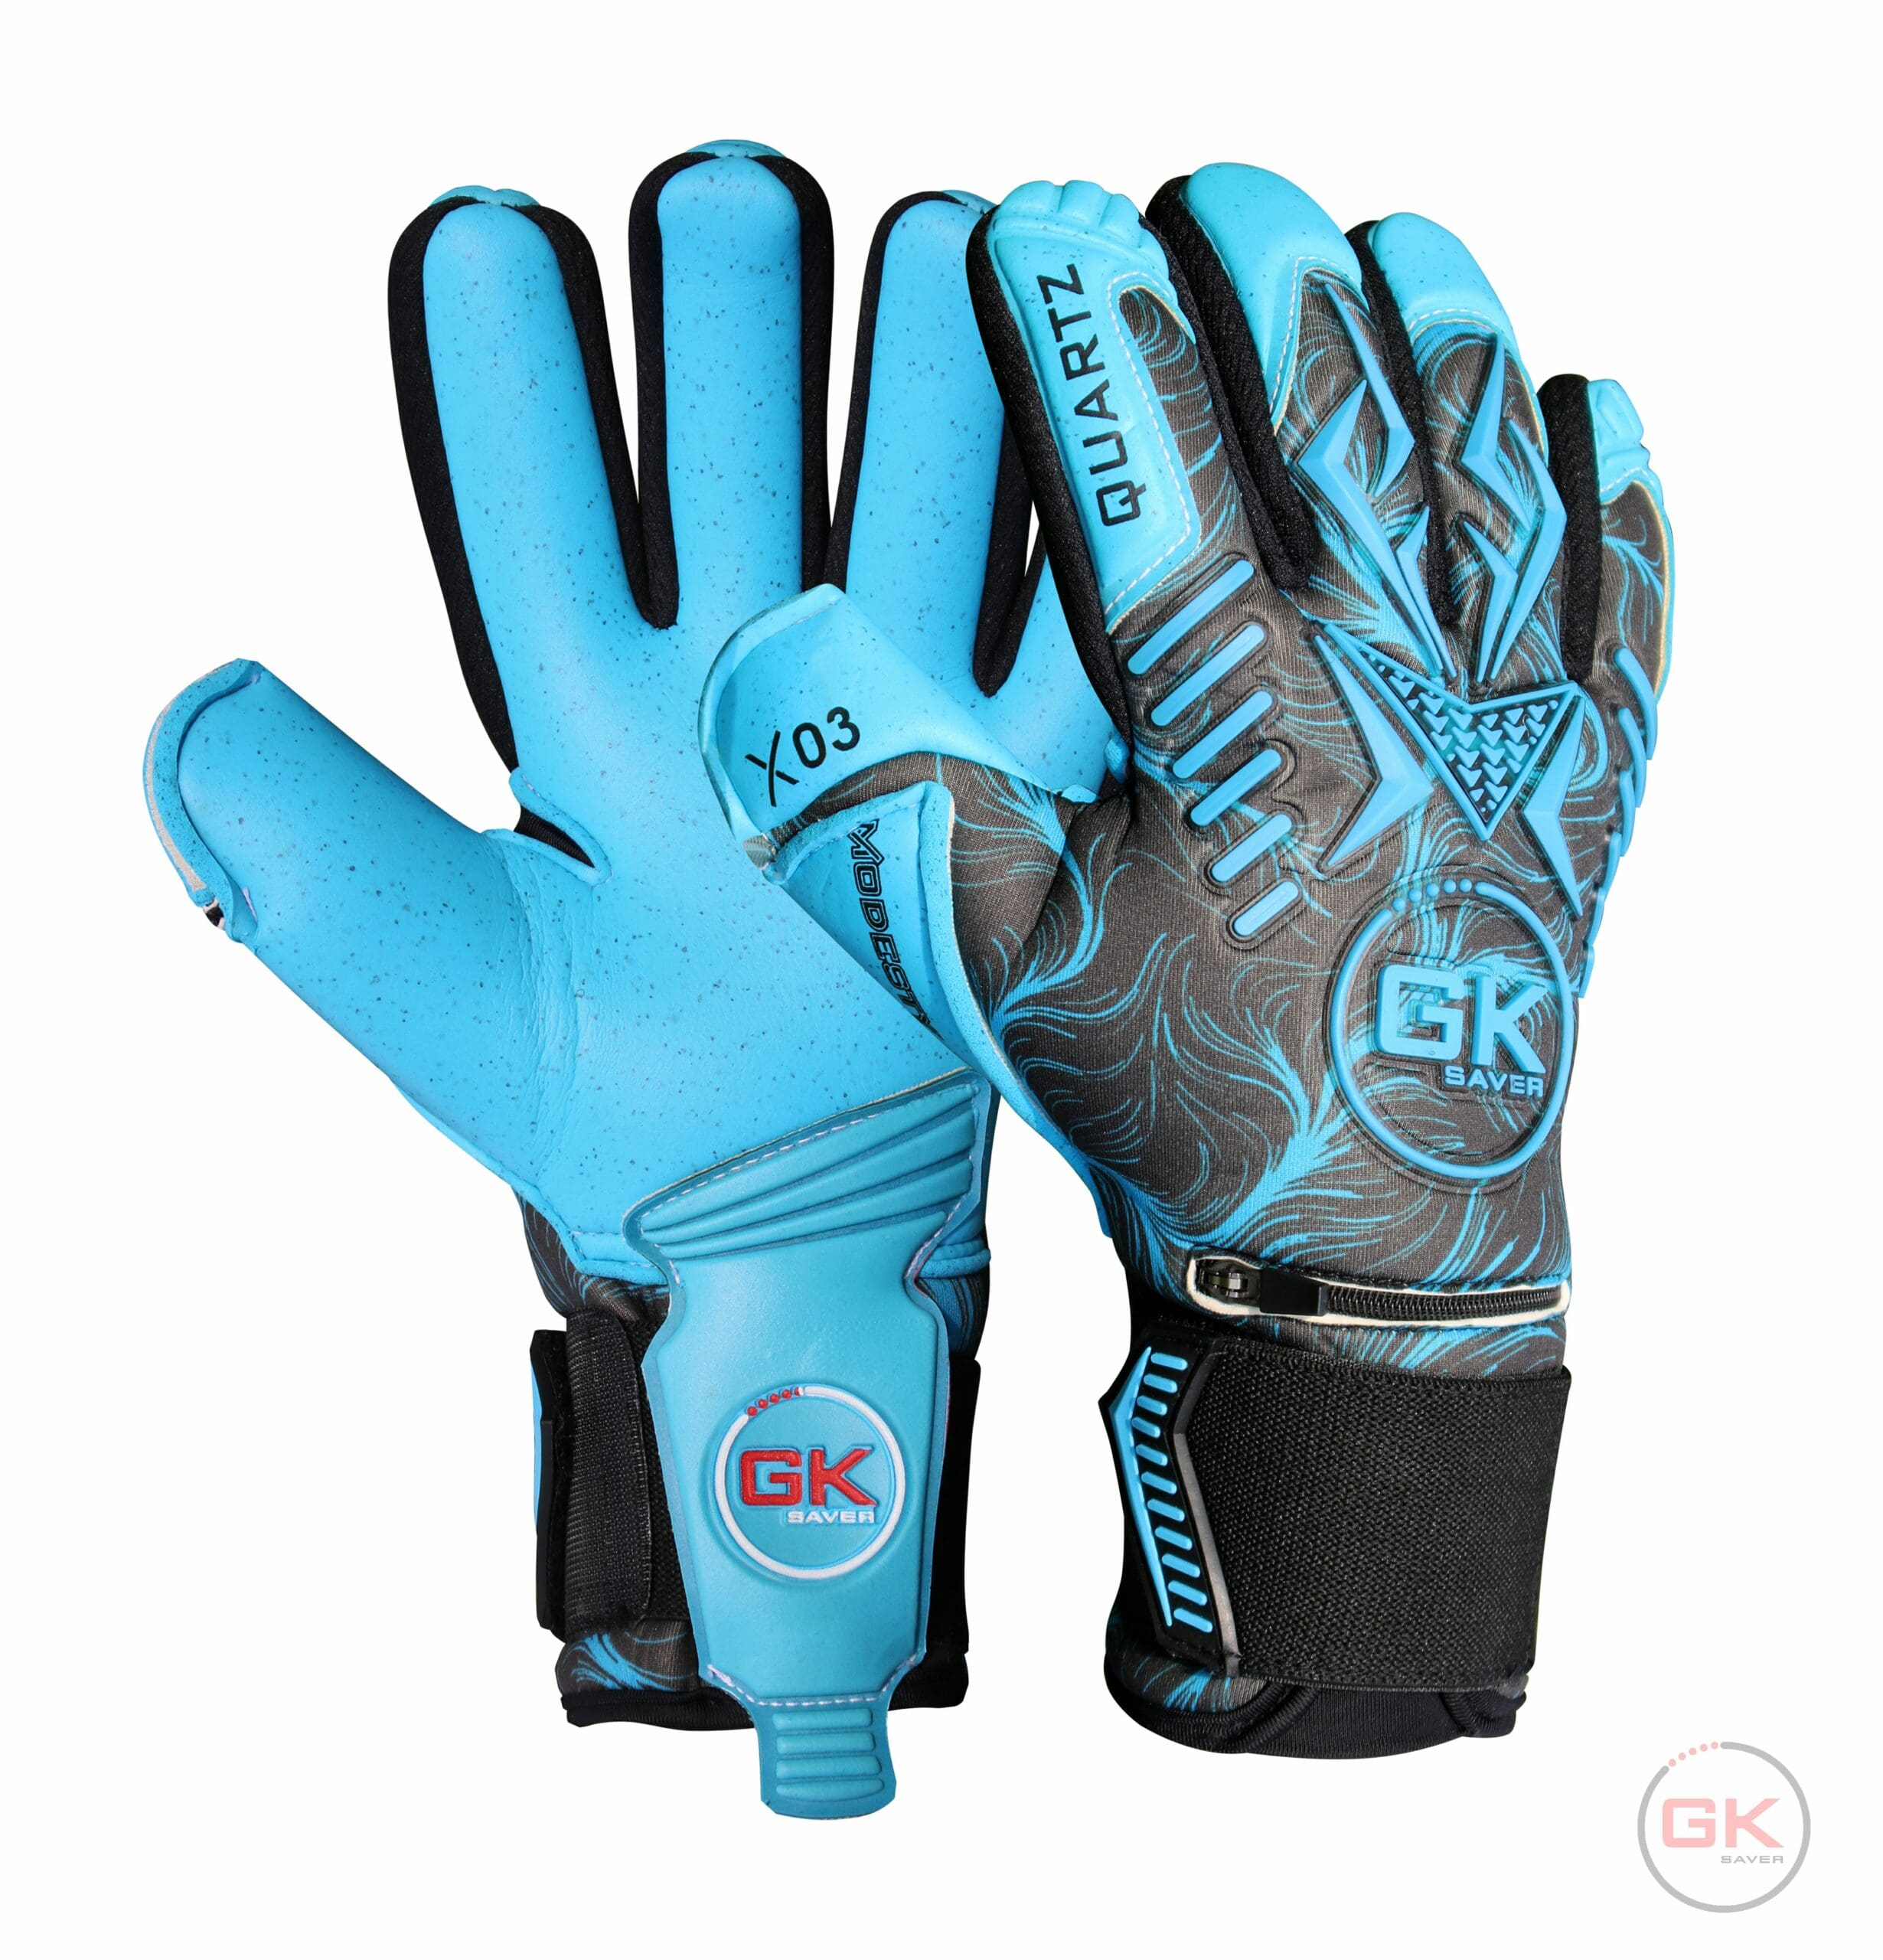 GK Saver Professional level football goalkeeper gloves Prime Pro 03 Black/Blue 